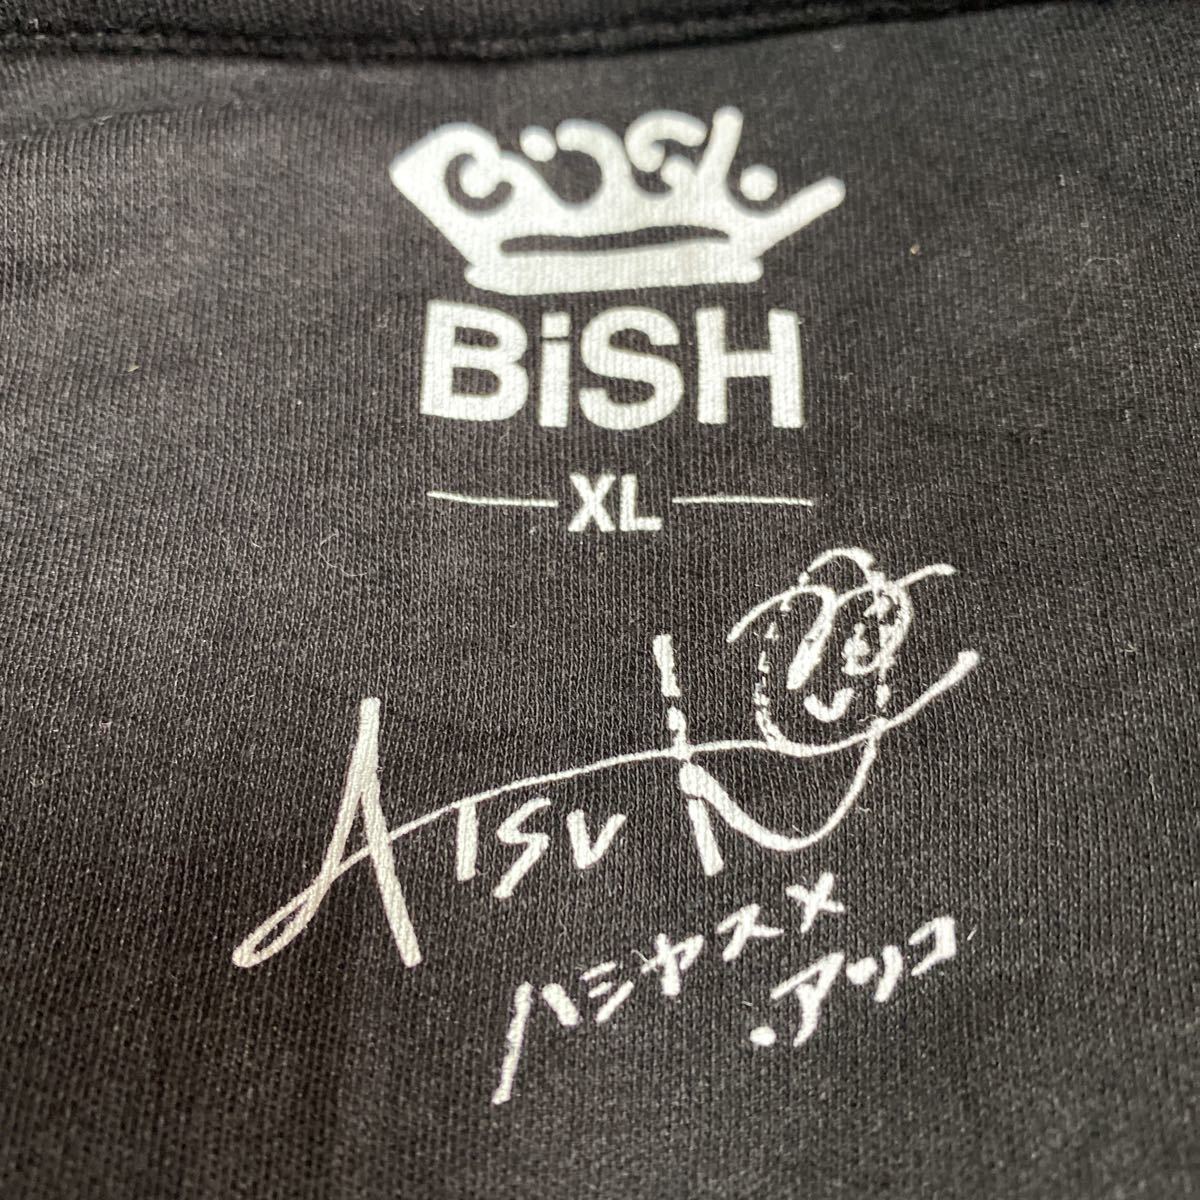  ultimate beautiful goods BiSH T-shirt XL size bishu postage nationwide equal 210 jpy 